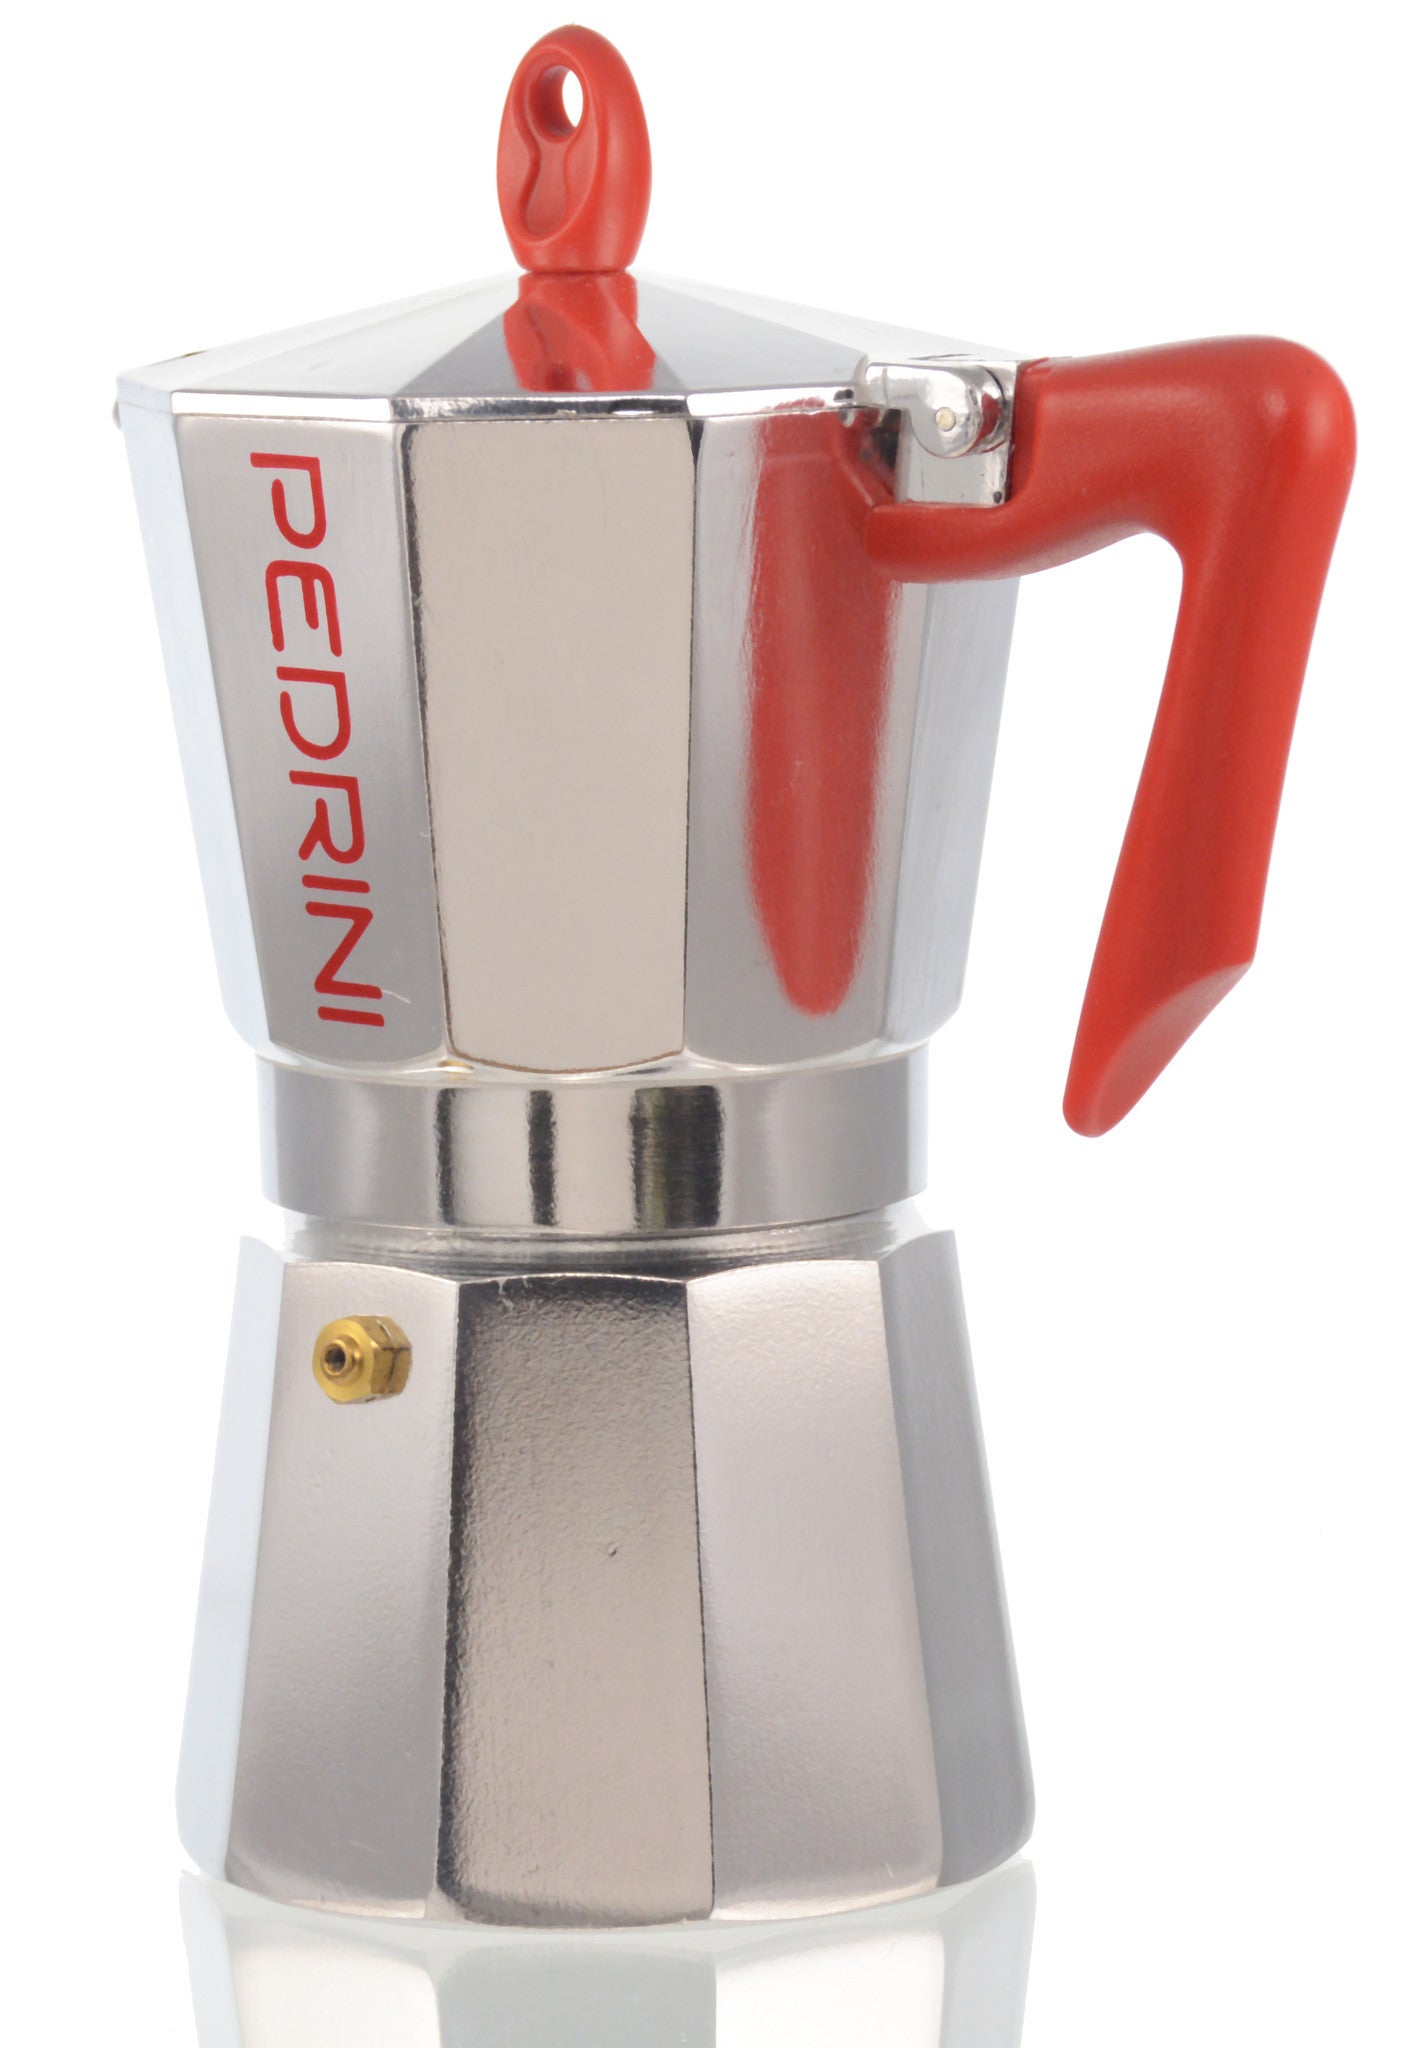 Celebration coffee maker 2,3 or 6 cups - Pedrini